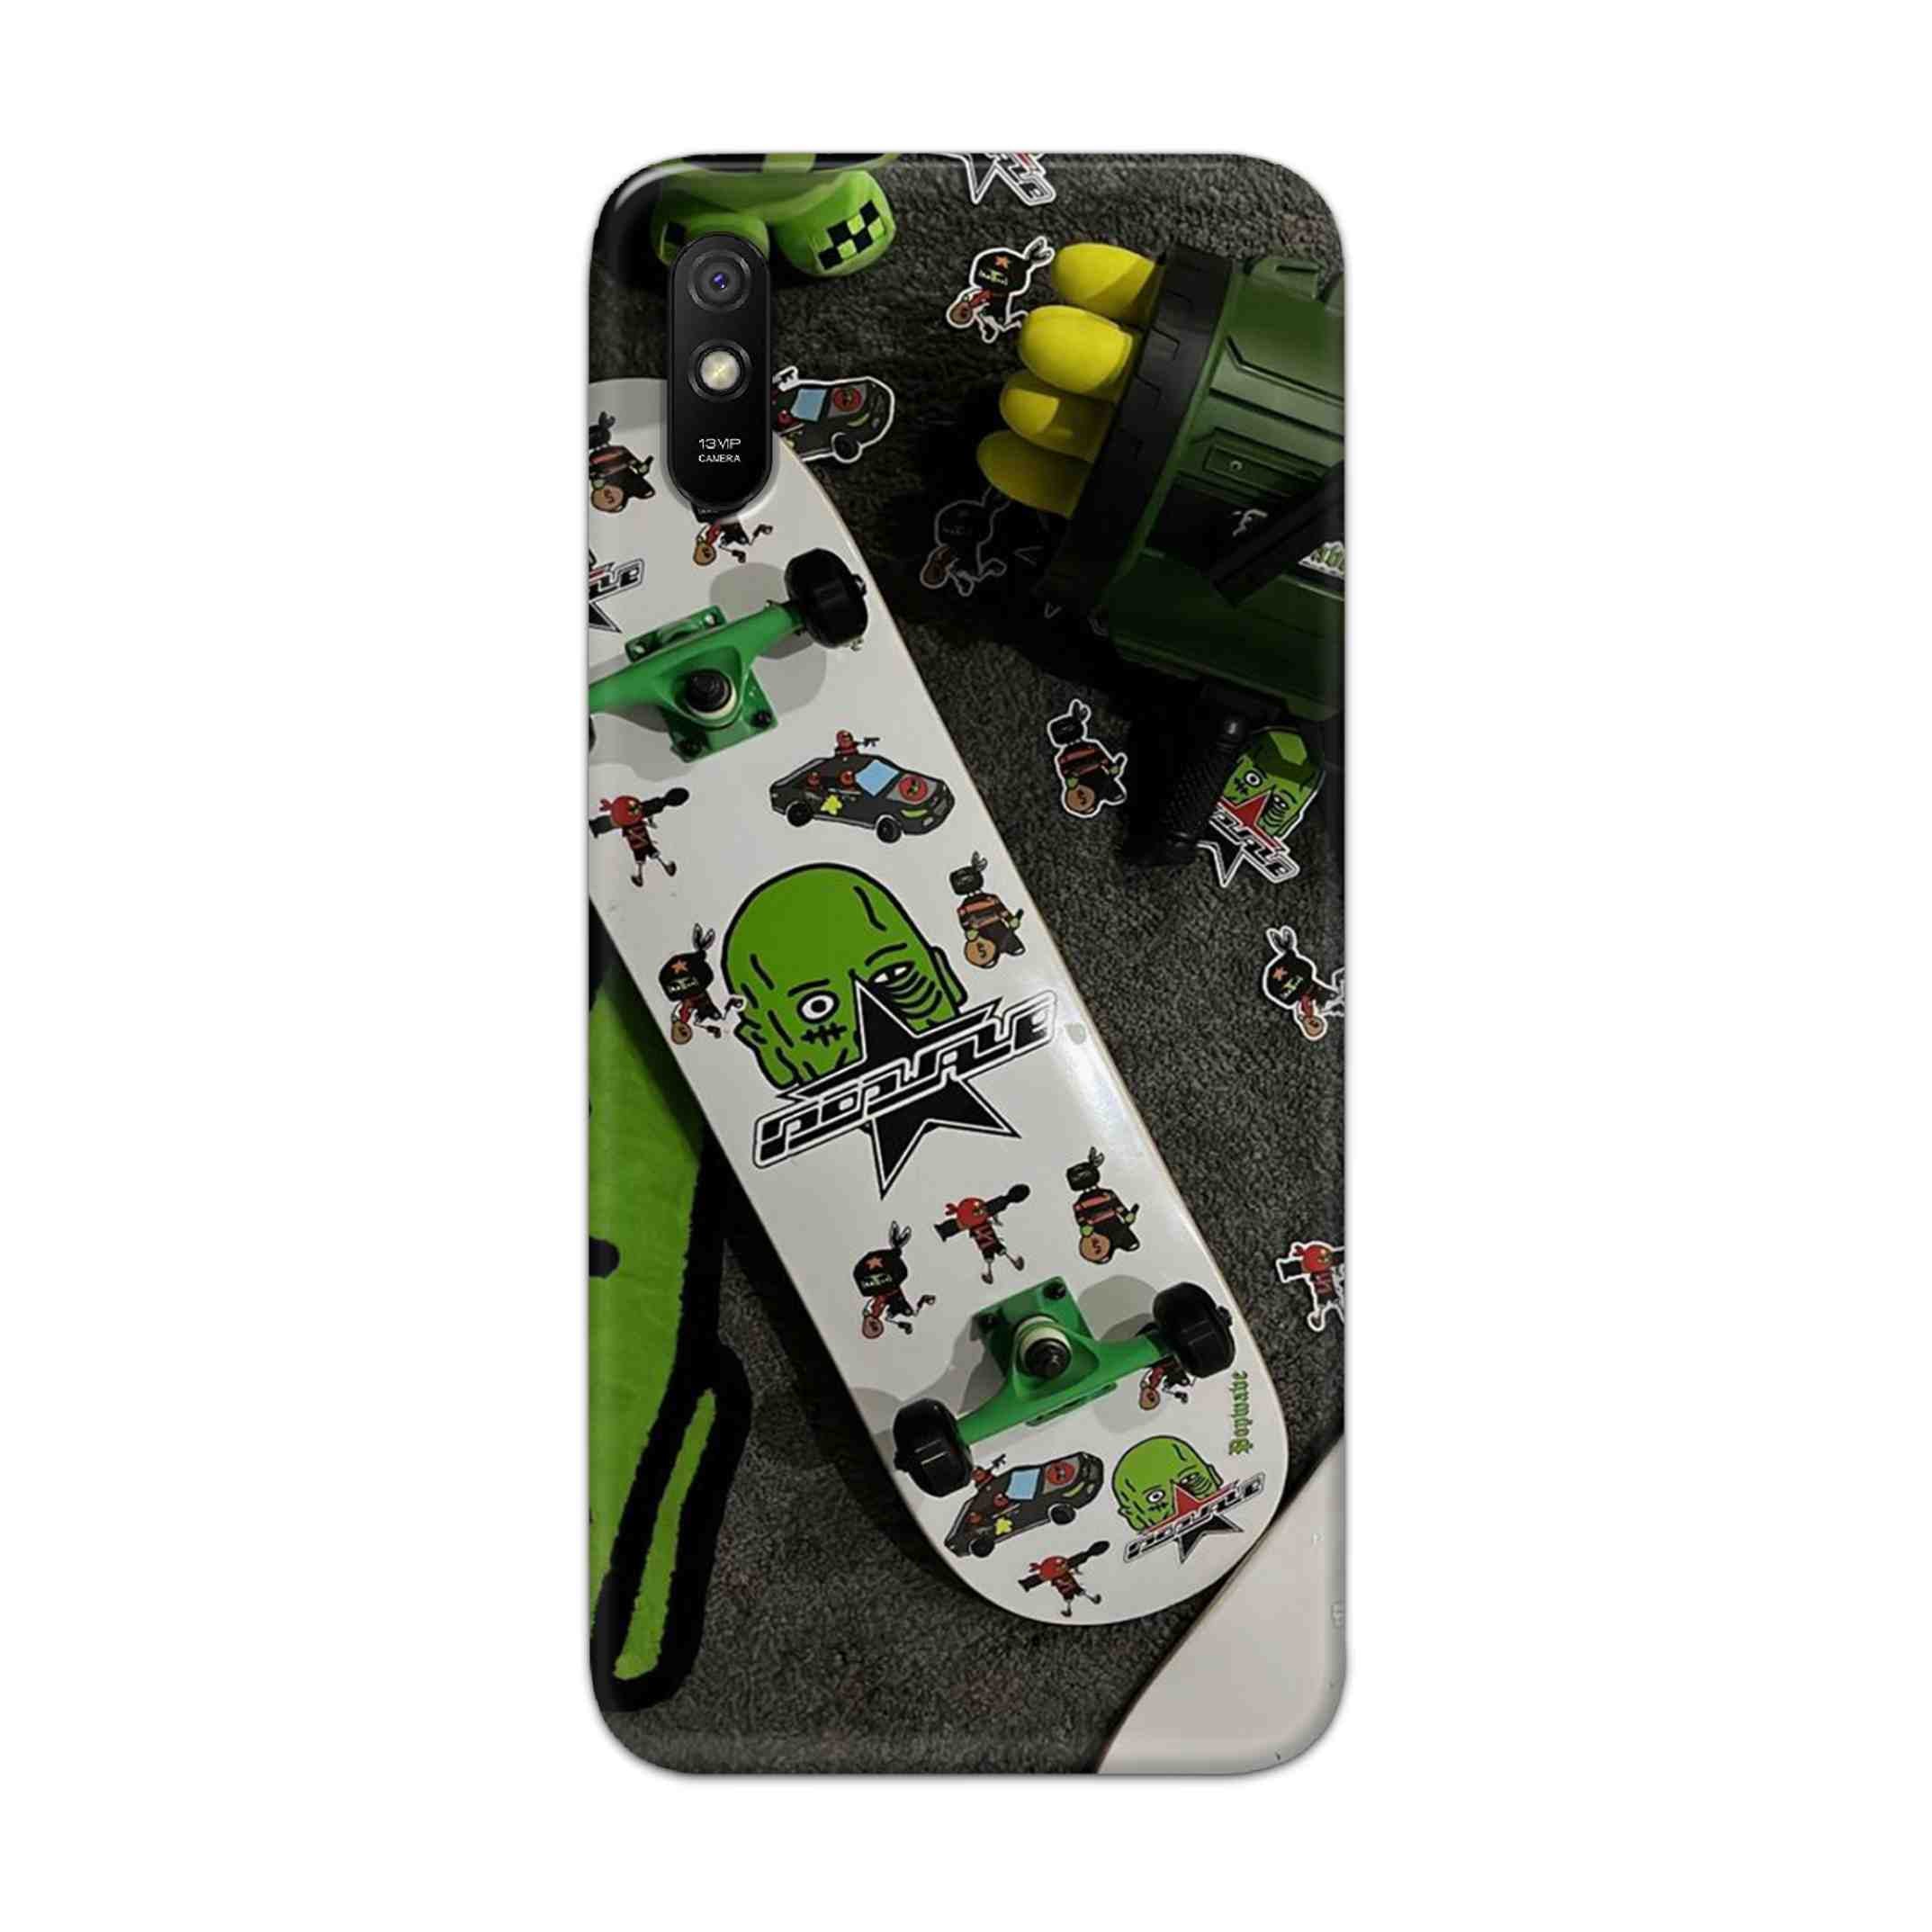 Buy Hulk Skateboard Hard Back Mobile Phone Case Cover For Redmi 9A Online